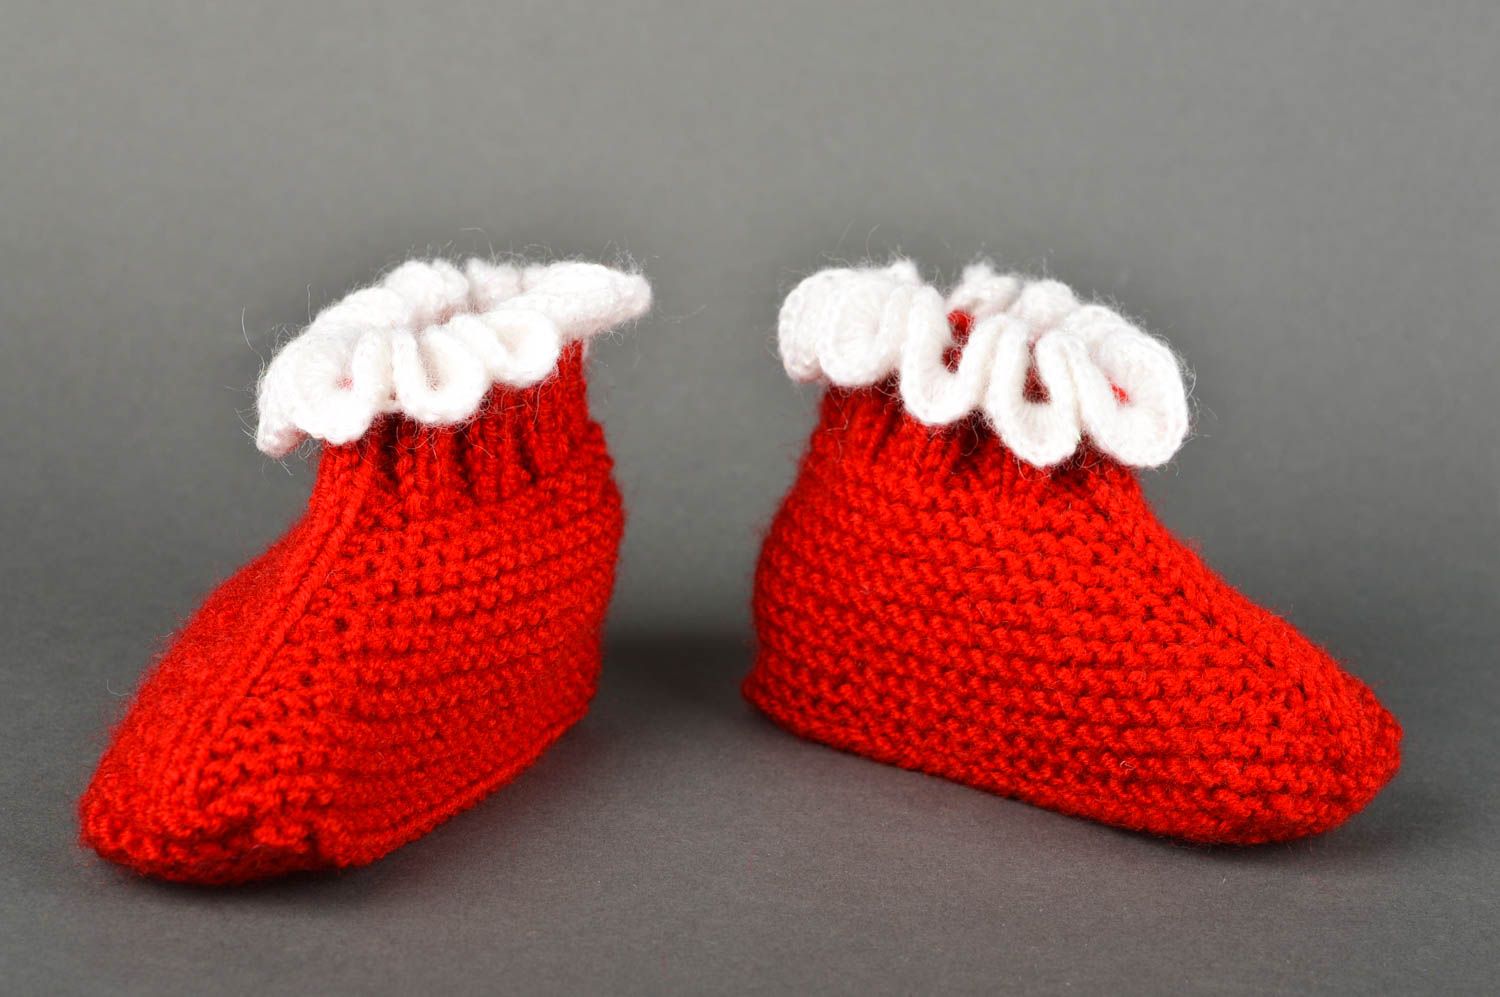 Unusual handmade soft baby booties crochet ideas warm baby socks gift ideas photo 2